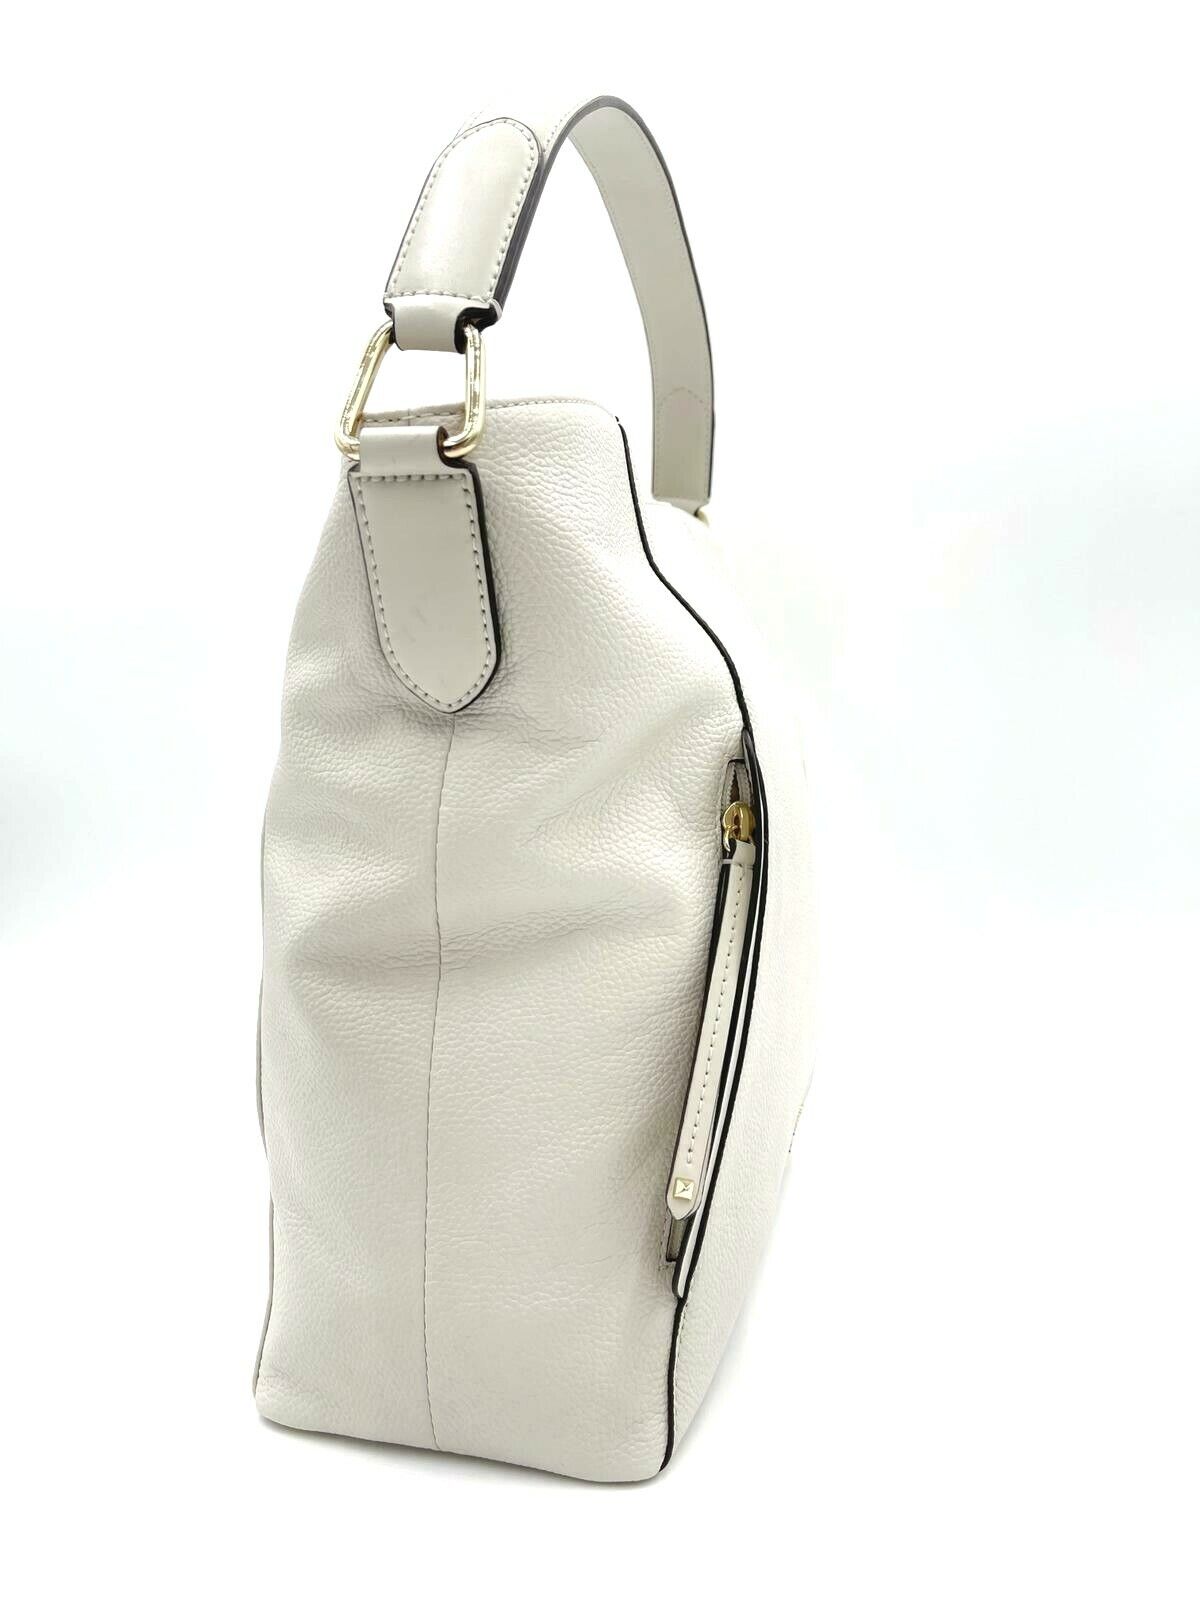 Michael Kors Evie Large Vanilla Hobo Shoulder Handbag - 193599486758